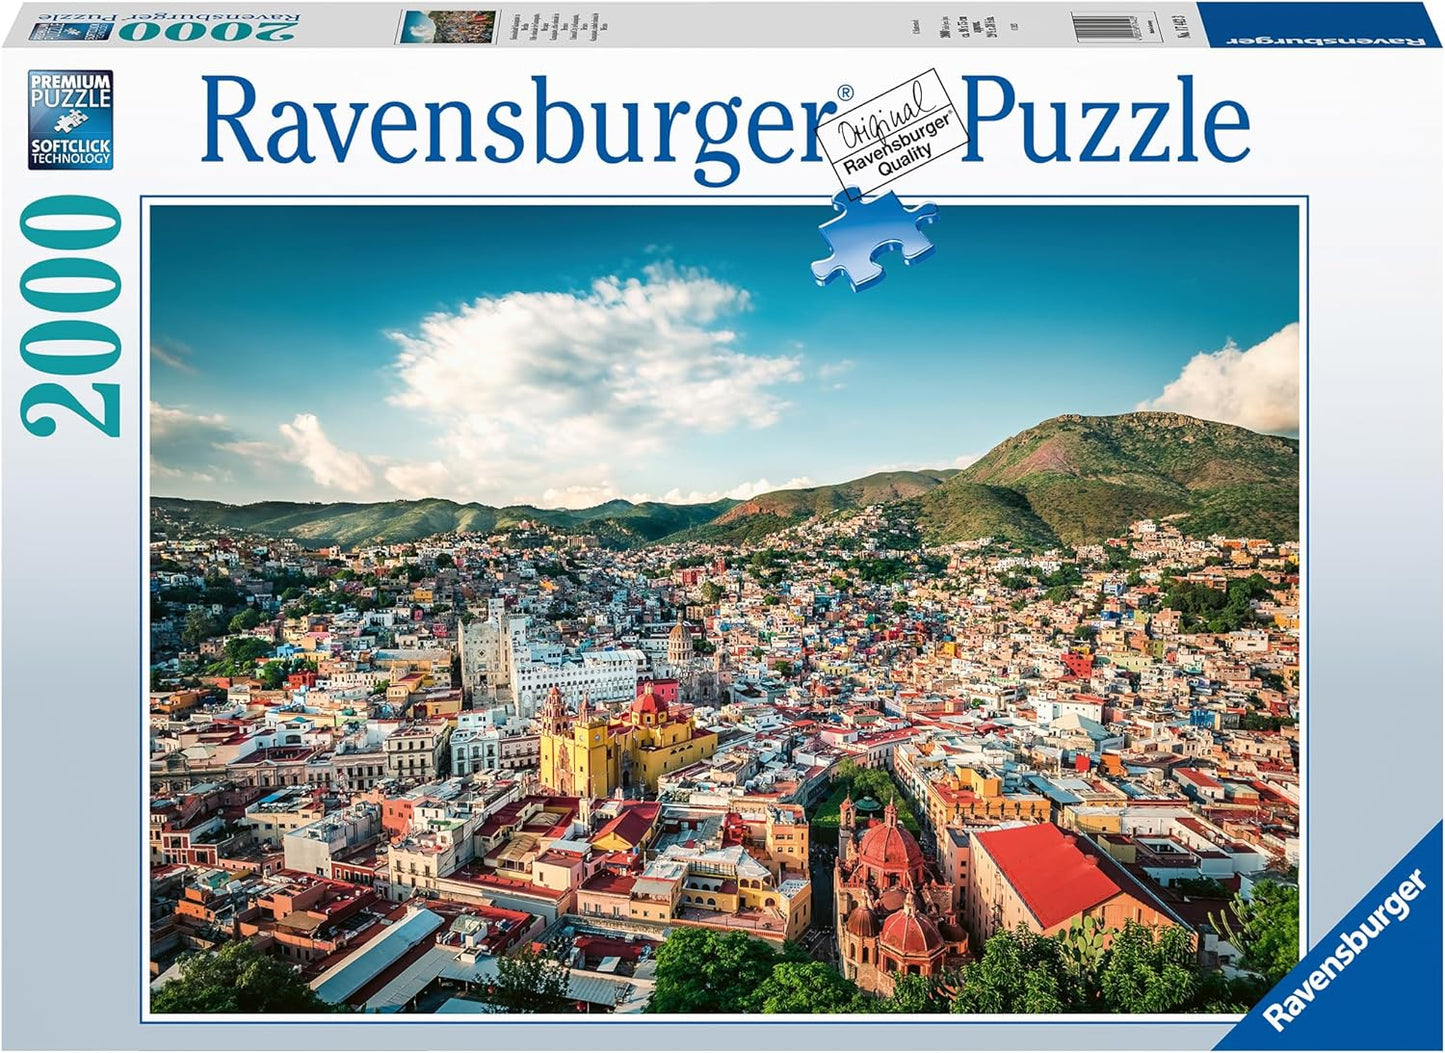 Ravensburger - Mexico Guanajato - 2000 Piece Jigsaw Puzzle